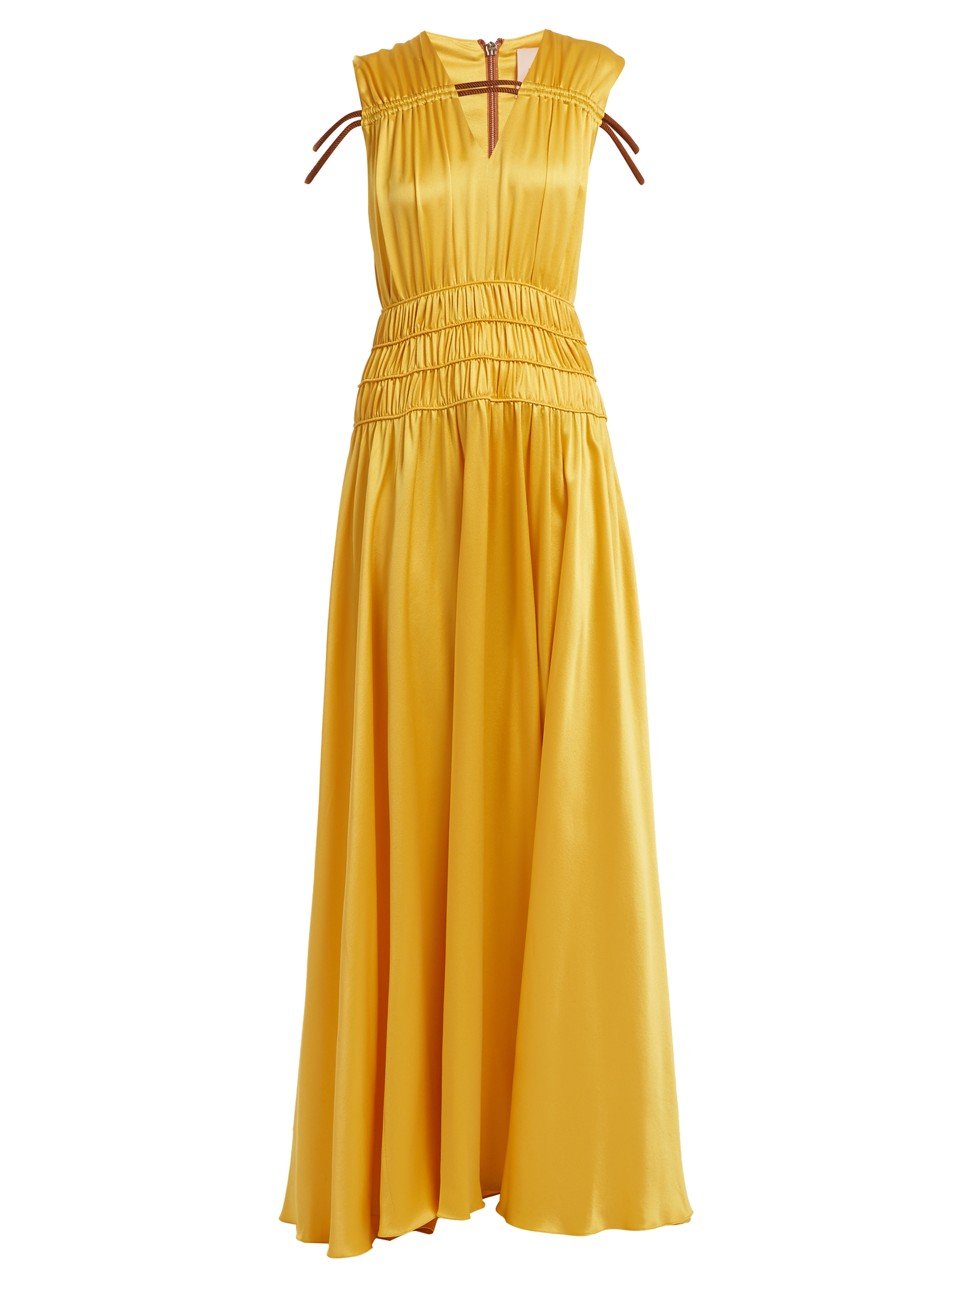 A Roksanda dress at Matchesfashion.com.